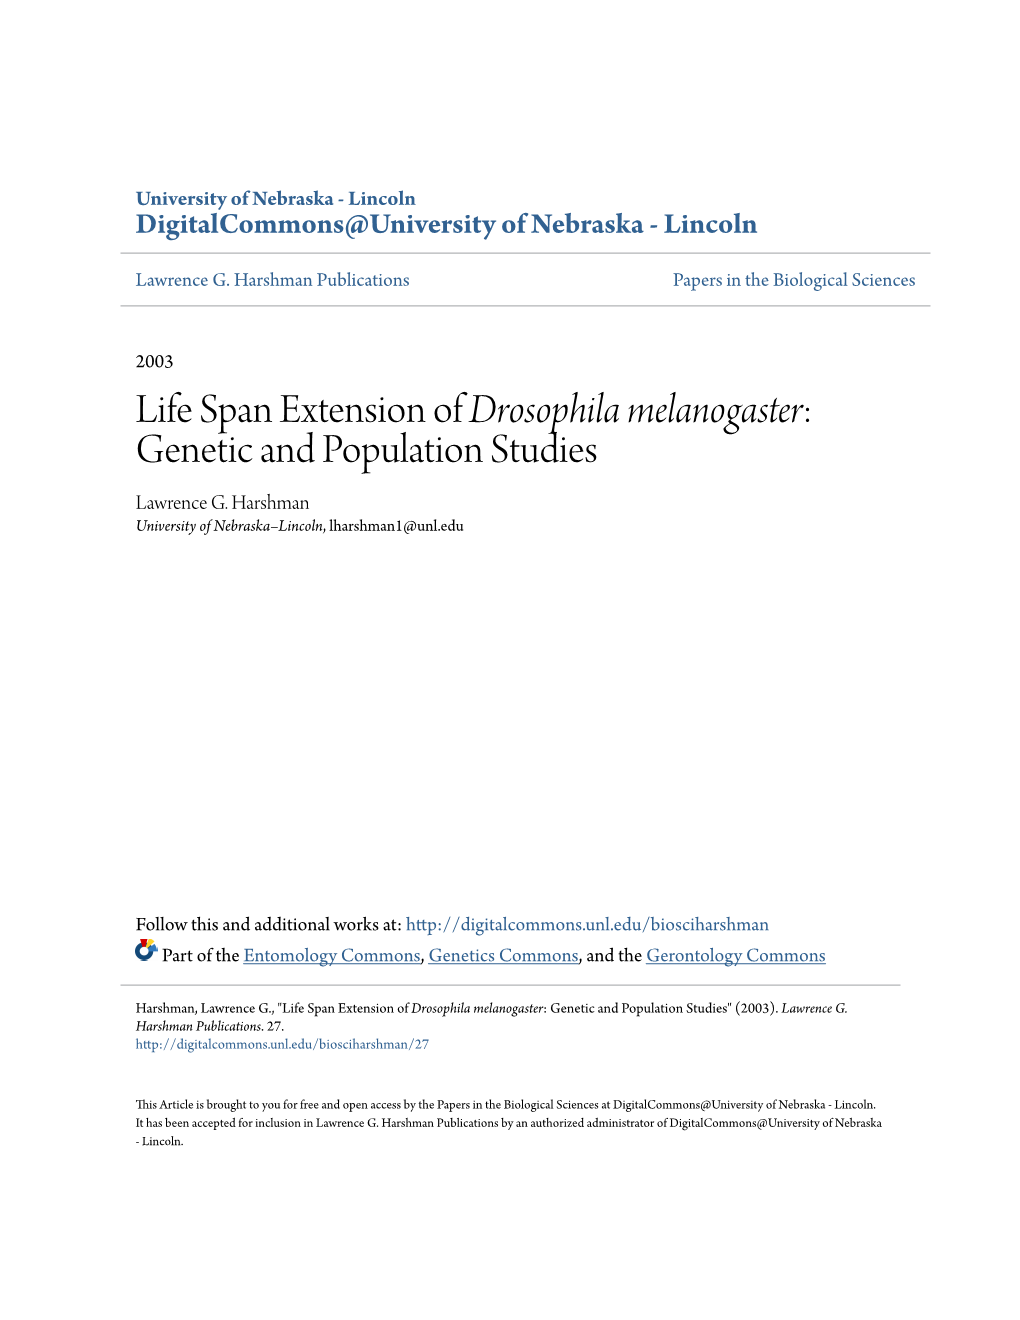 Life Span Extension of Drosophila Melanogaster: Genetic and Population Studies Lawrence G